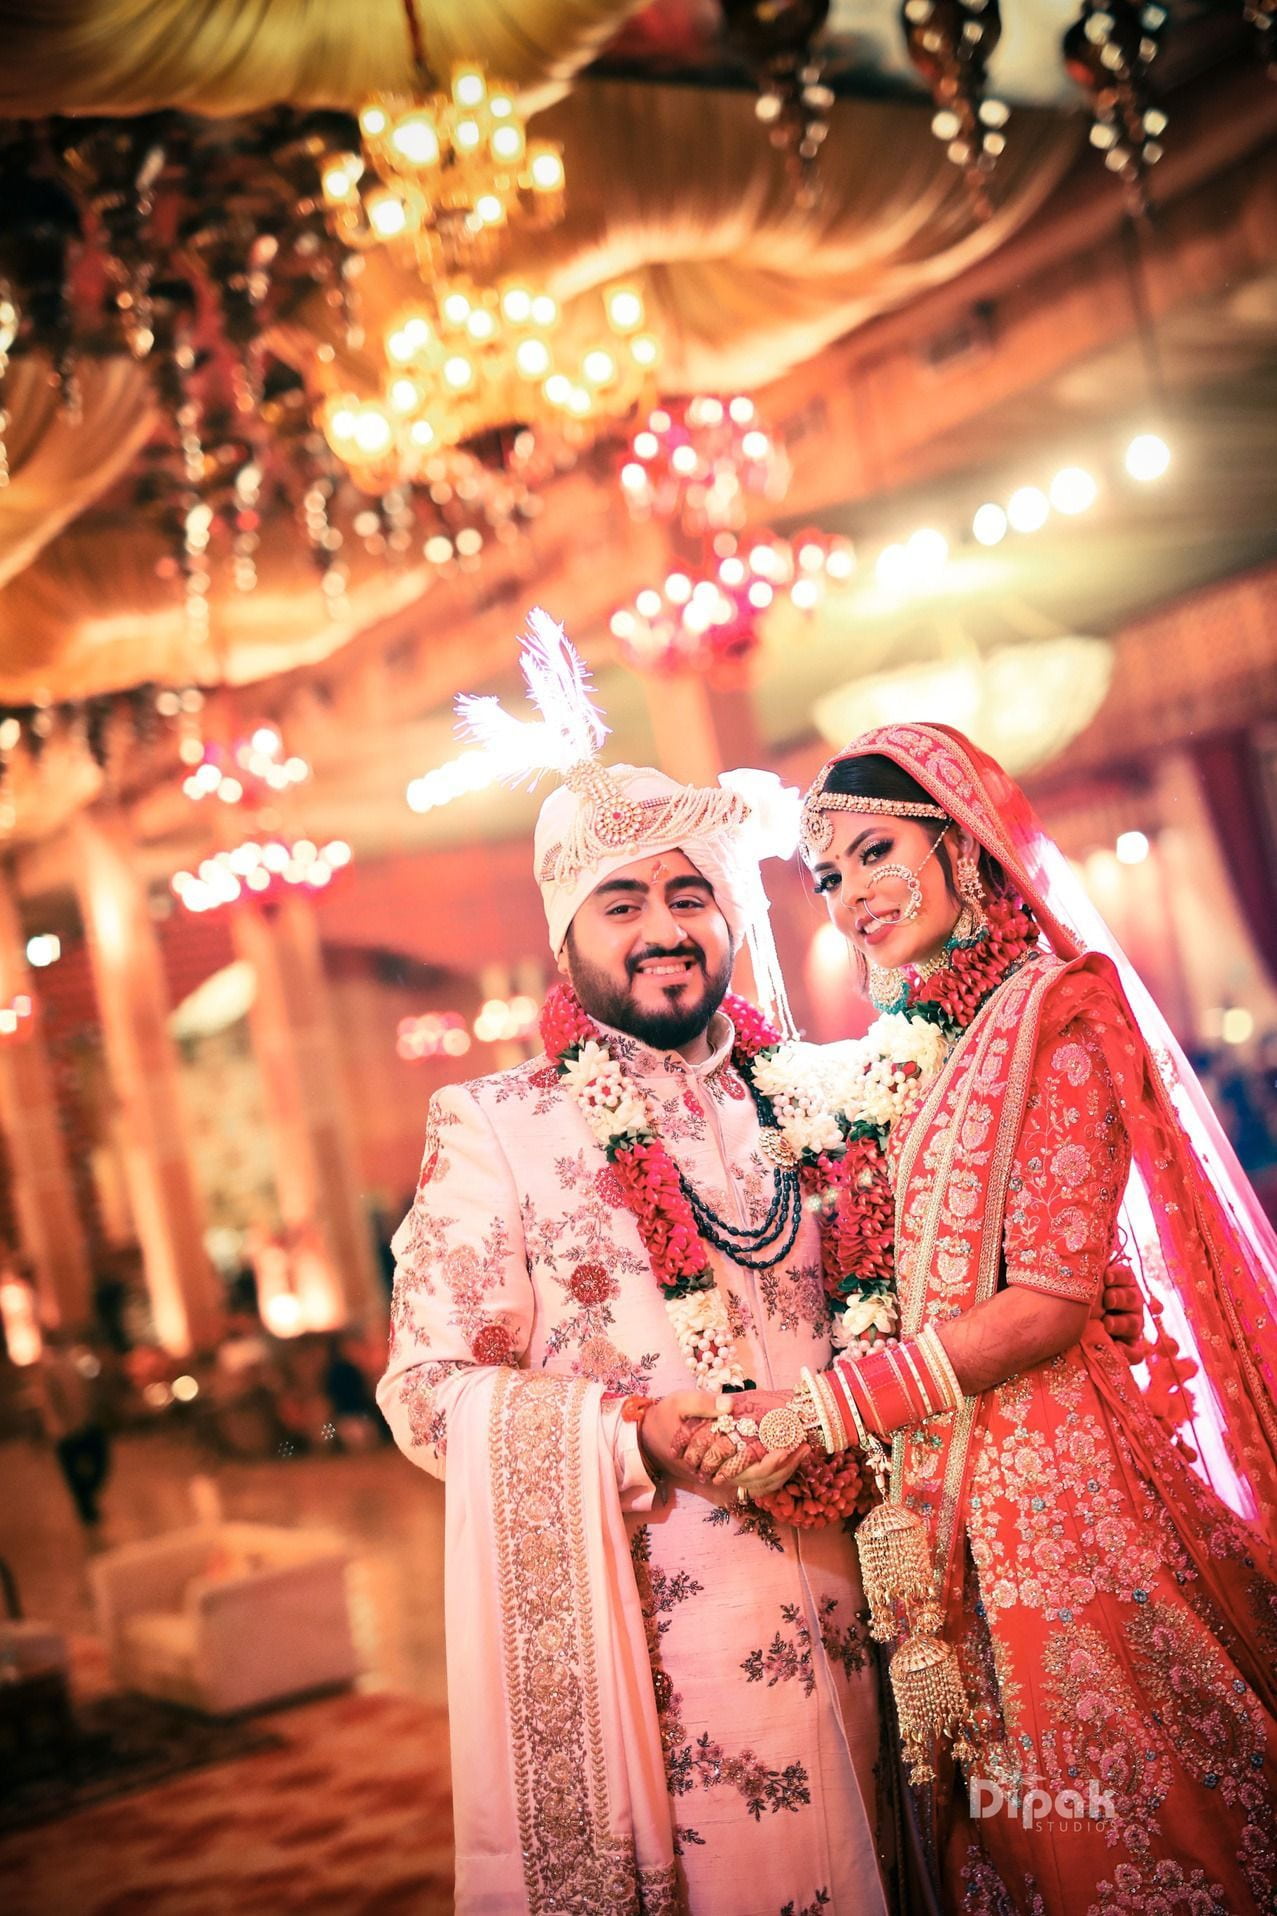 How long do Bangladeshi weddings last